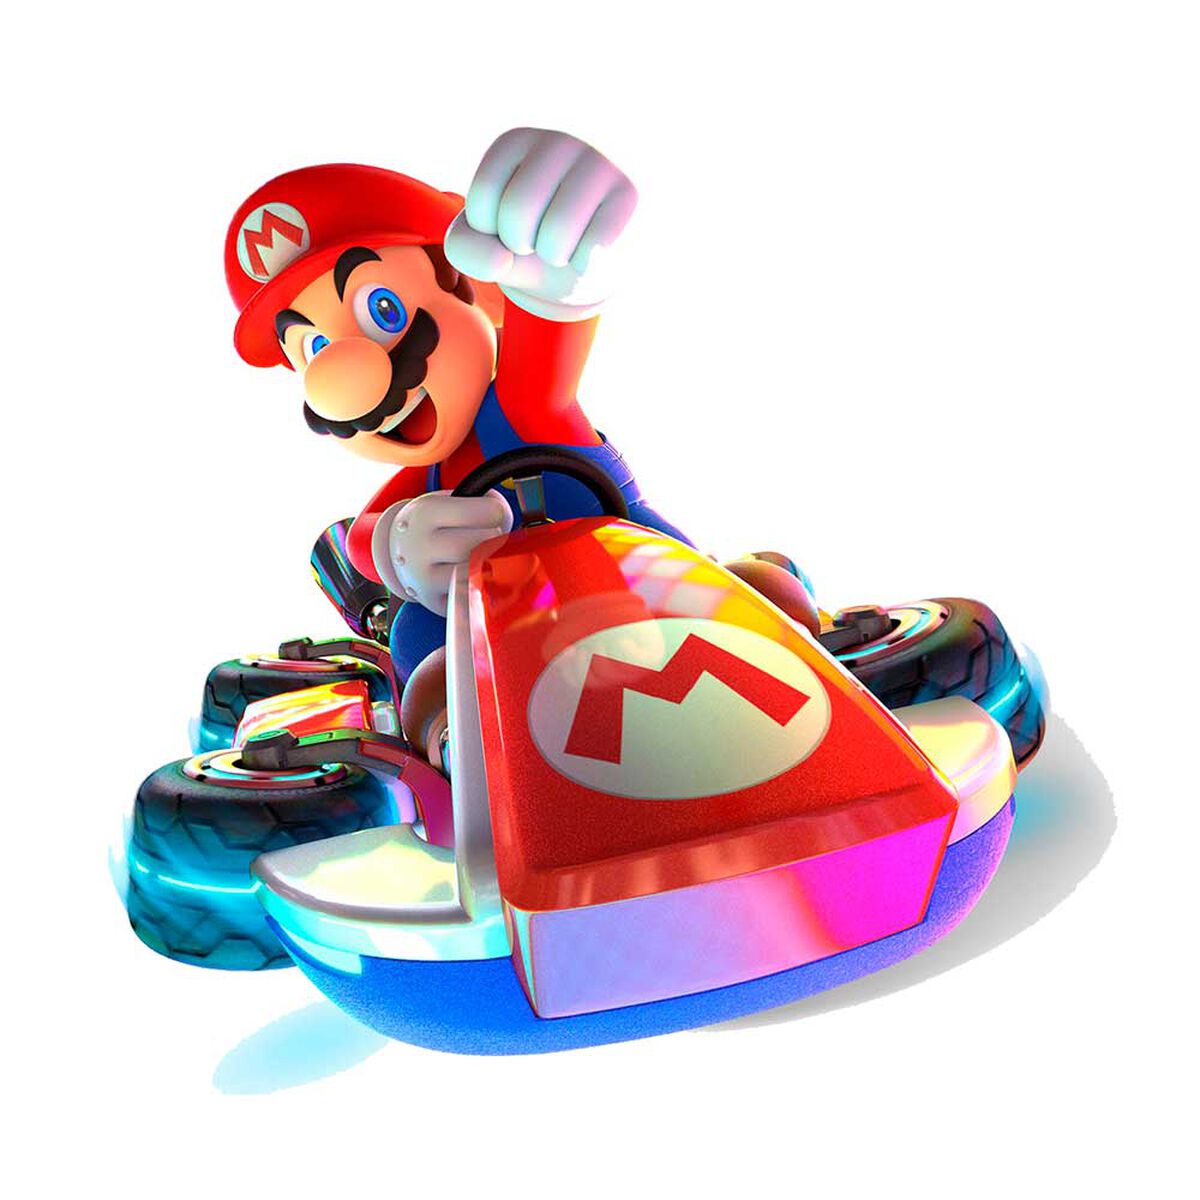 Juego Nintendo Switch Mario Kart 8 Deluxe